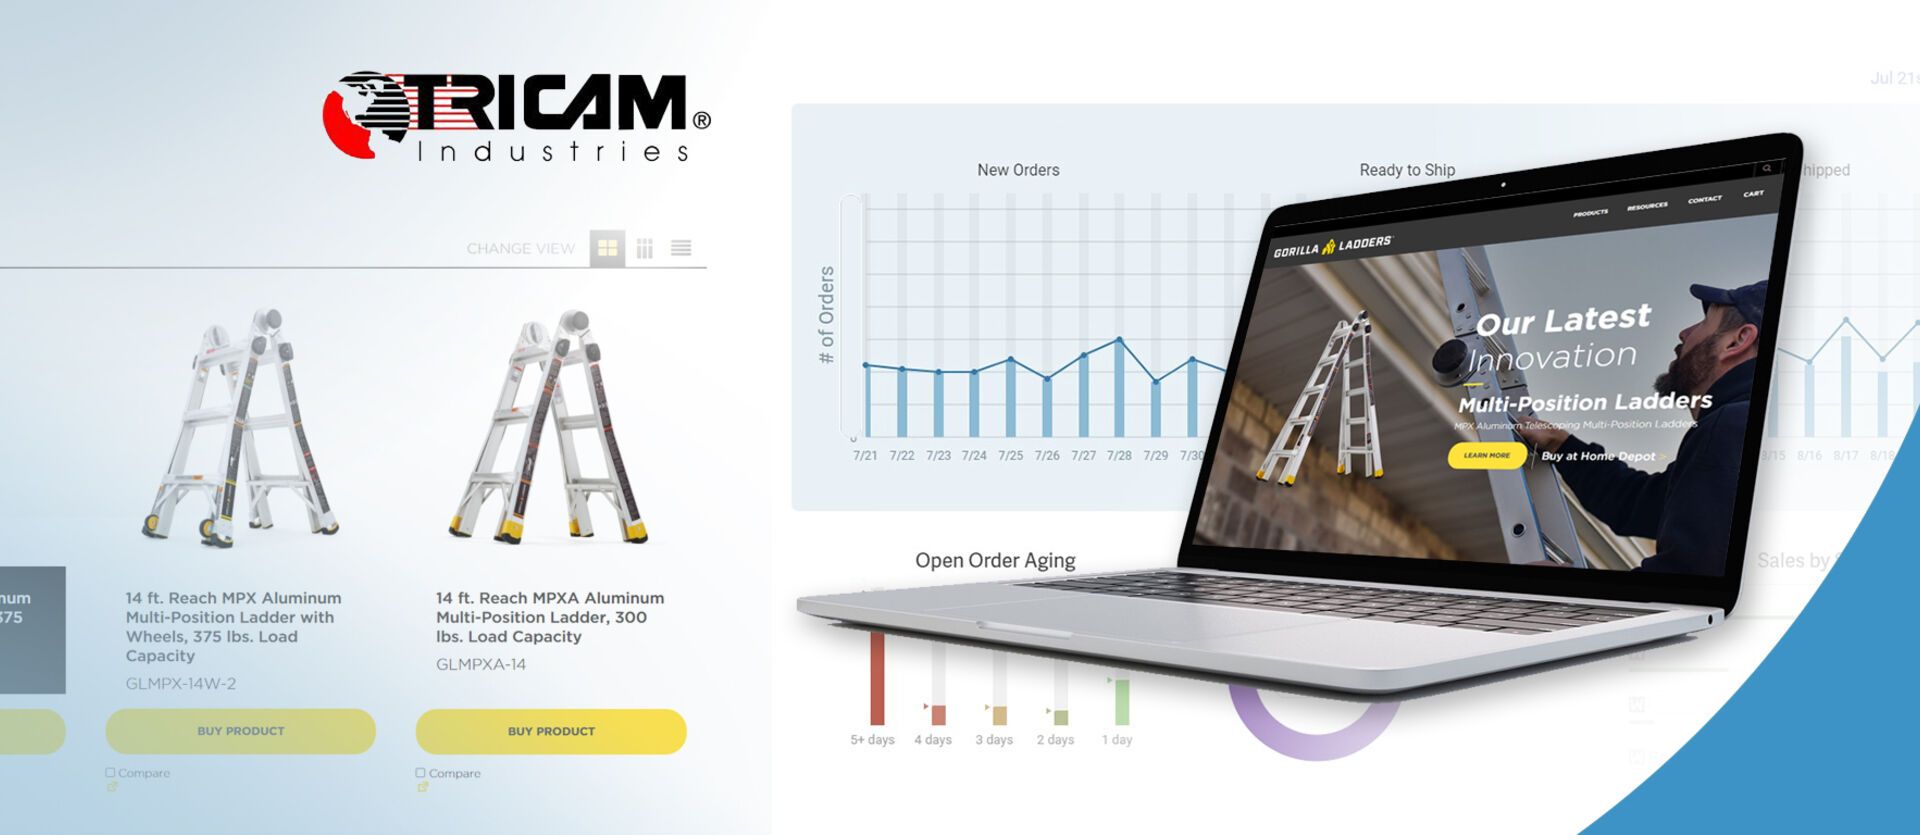 Tricam Industries image